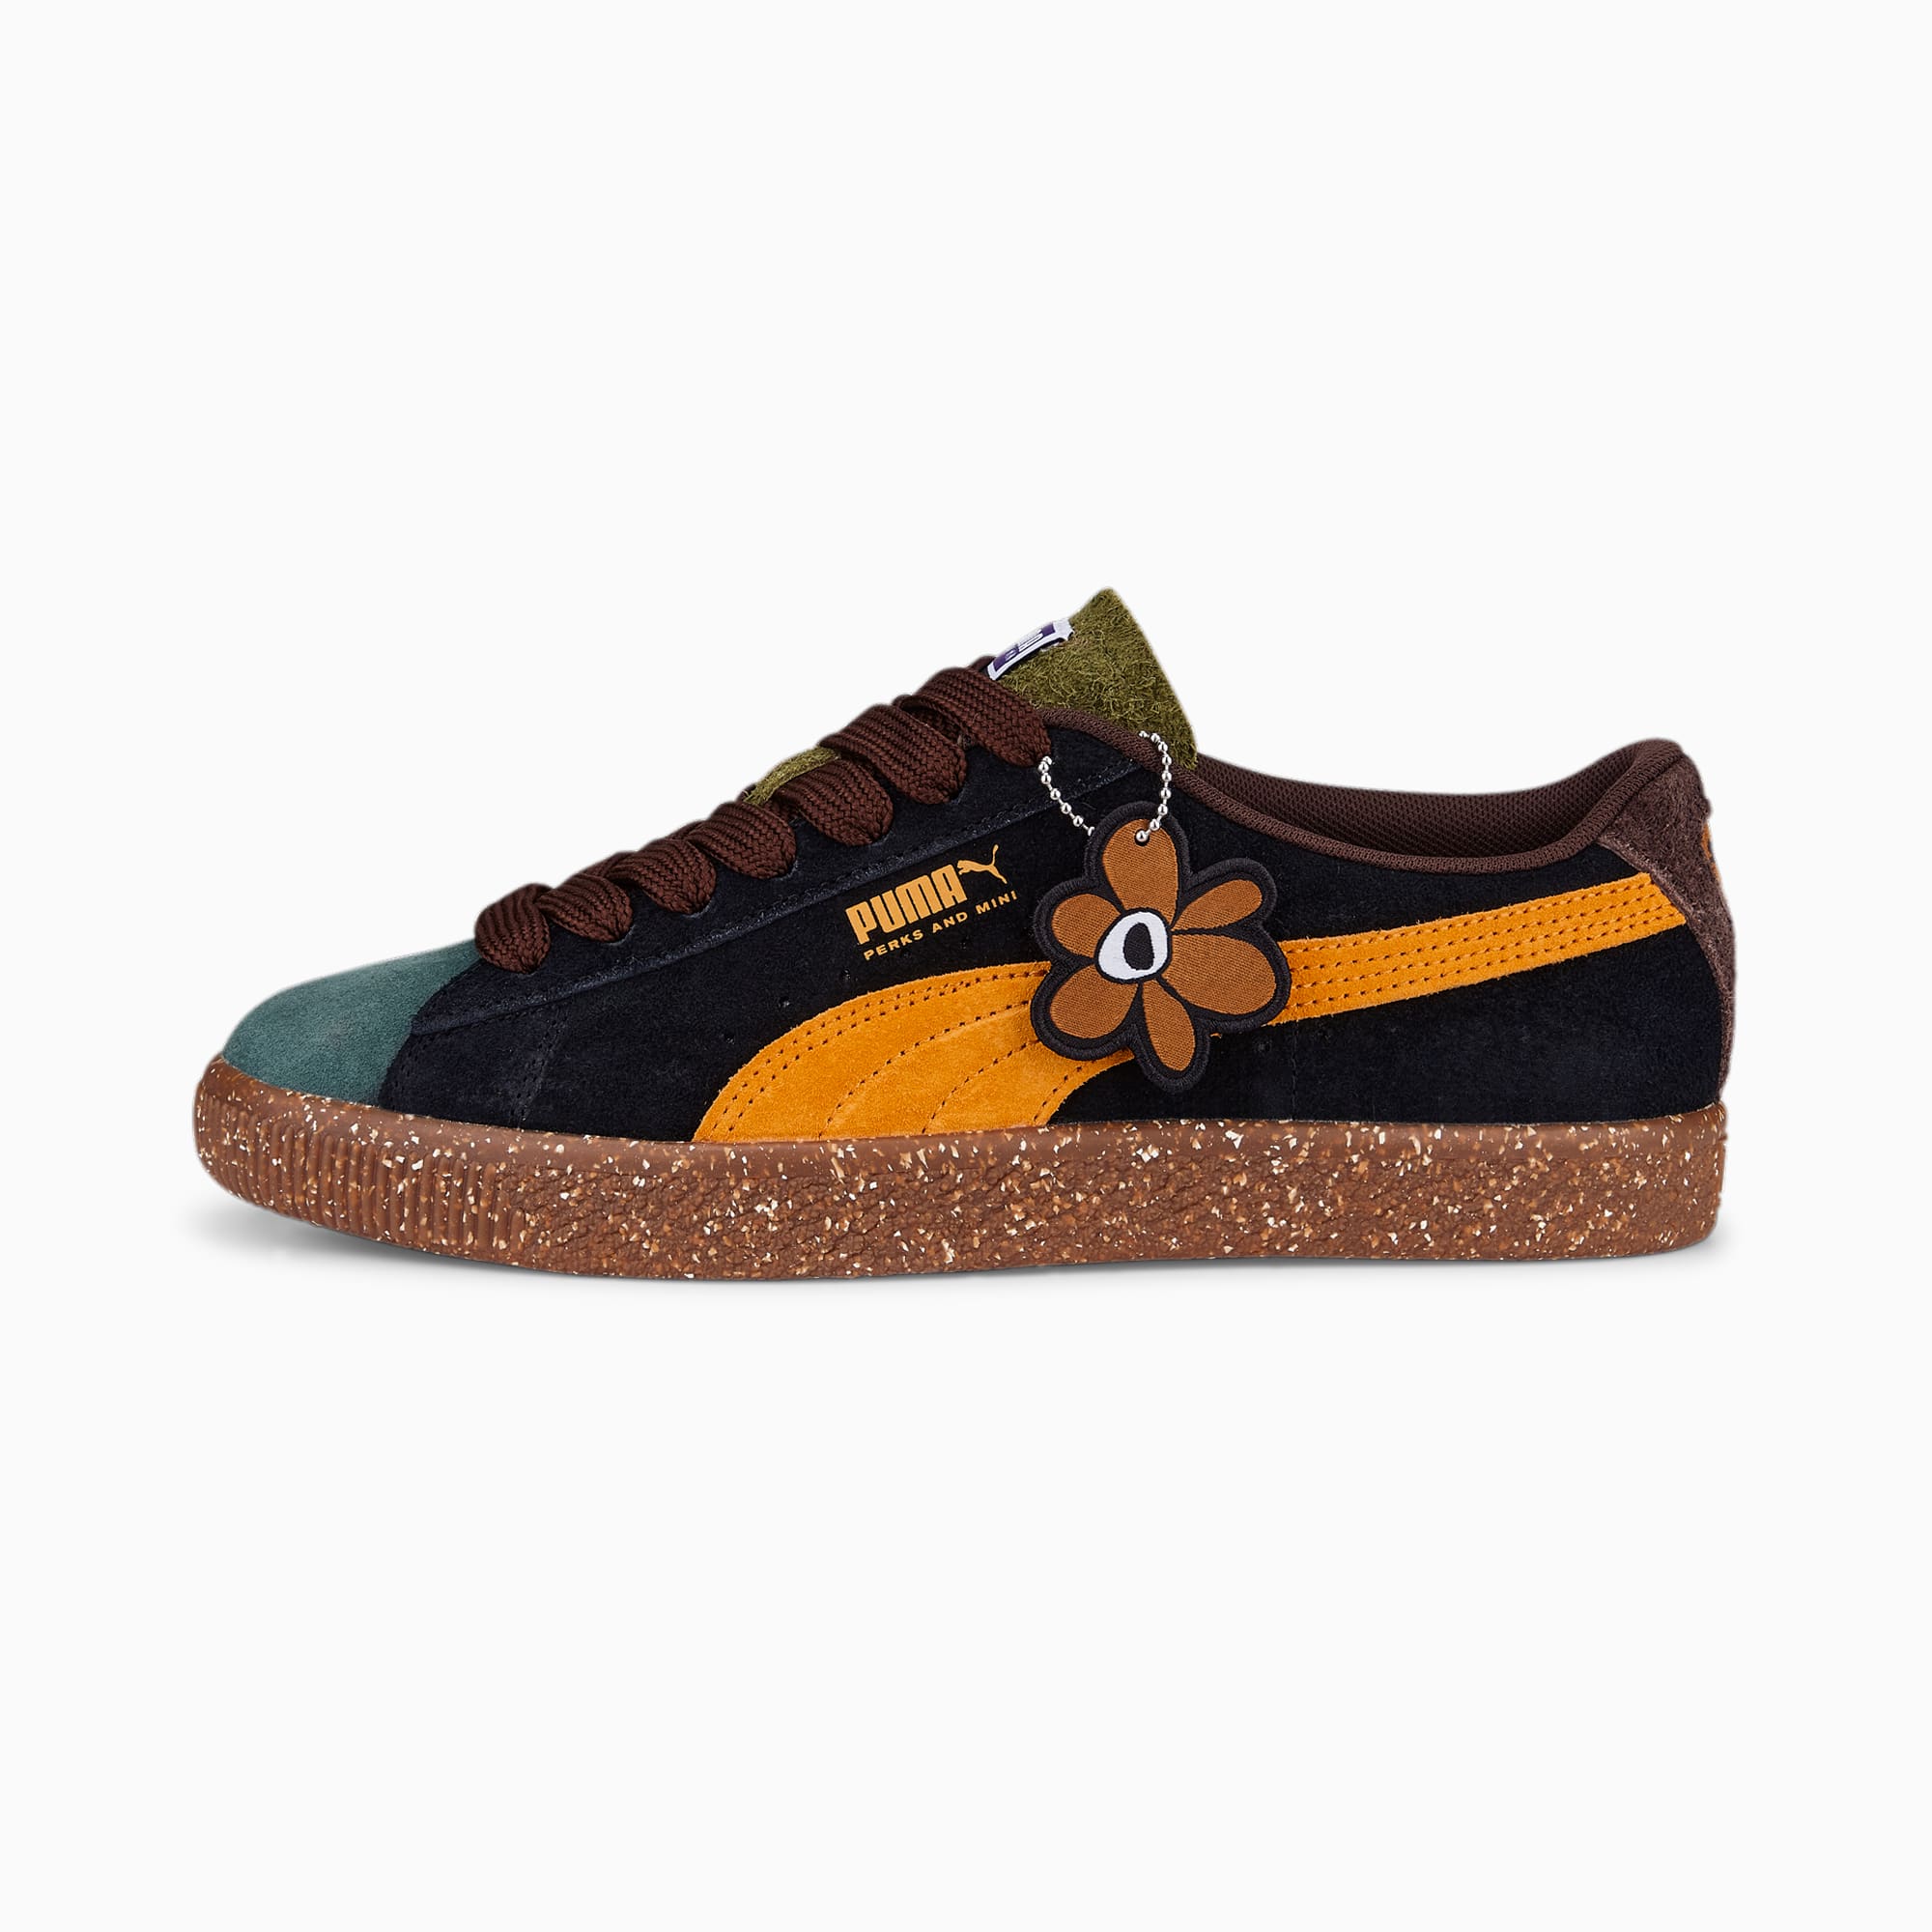 PUMA x PERKS AND MINI Suede VTG Sneakers | Dark Chocolate-Burnt  Olive-Orange Brick-Balsam Green | PUMA Shoes | PUMA